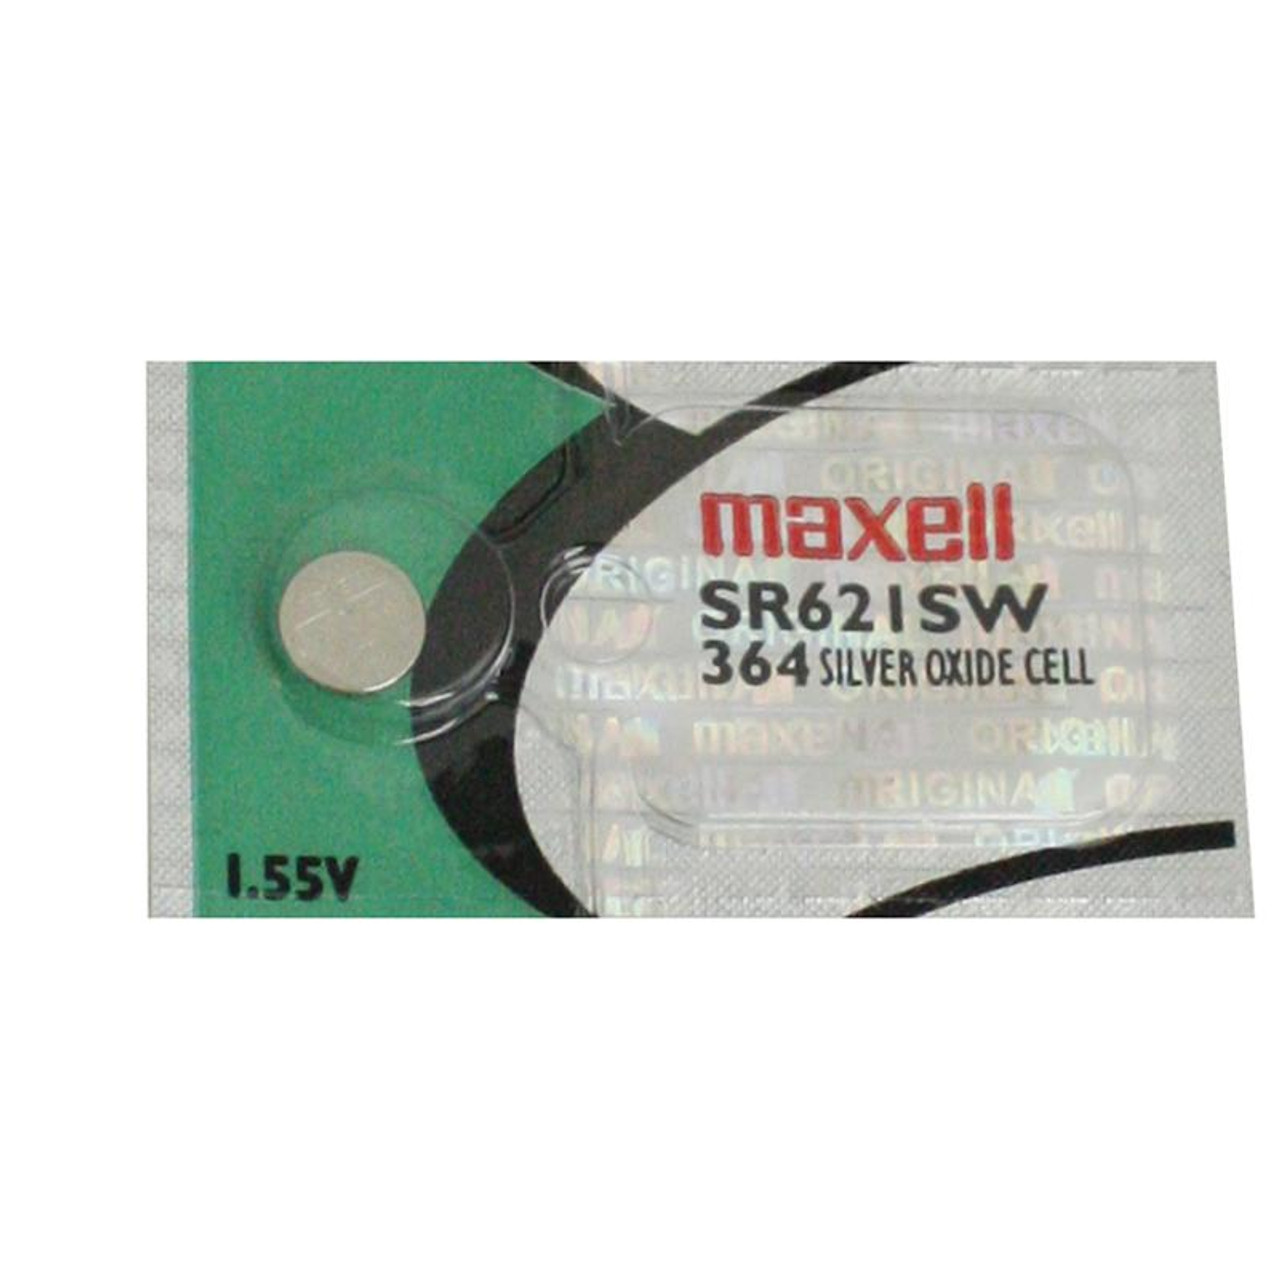 Maxell Watch Battery Conversion Chart